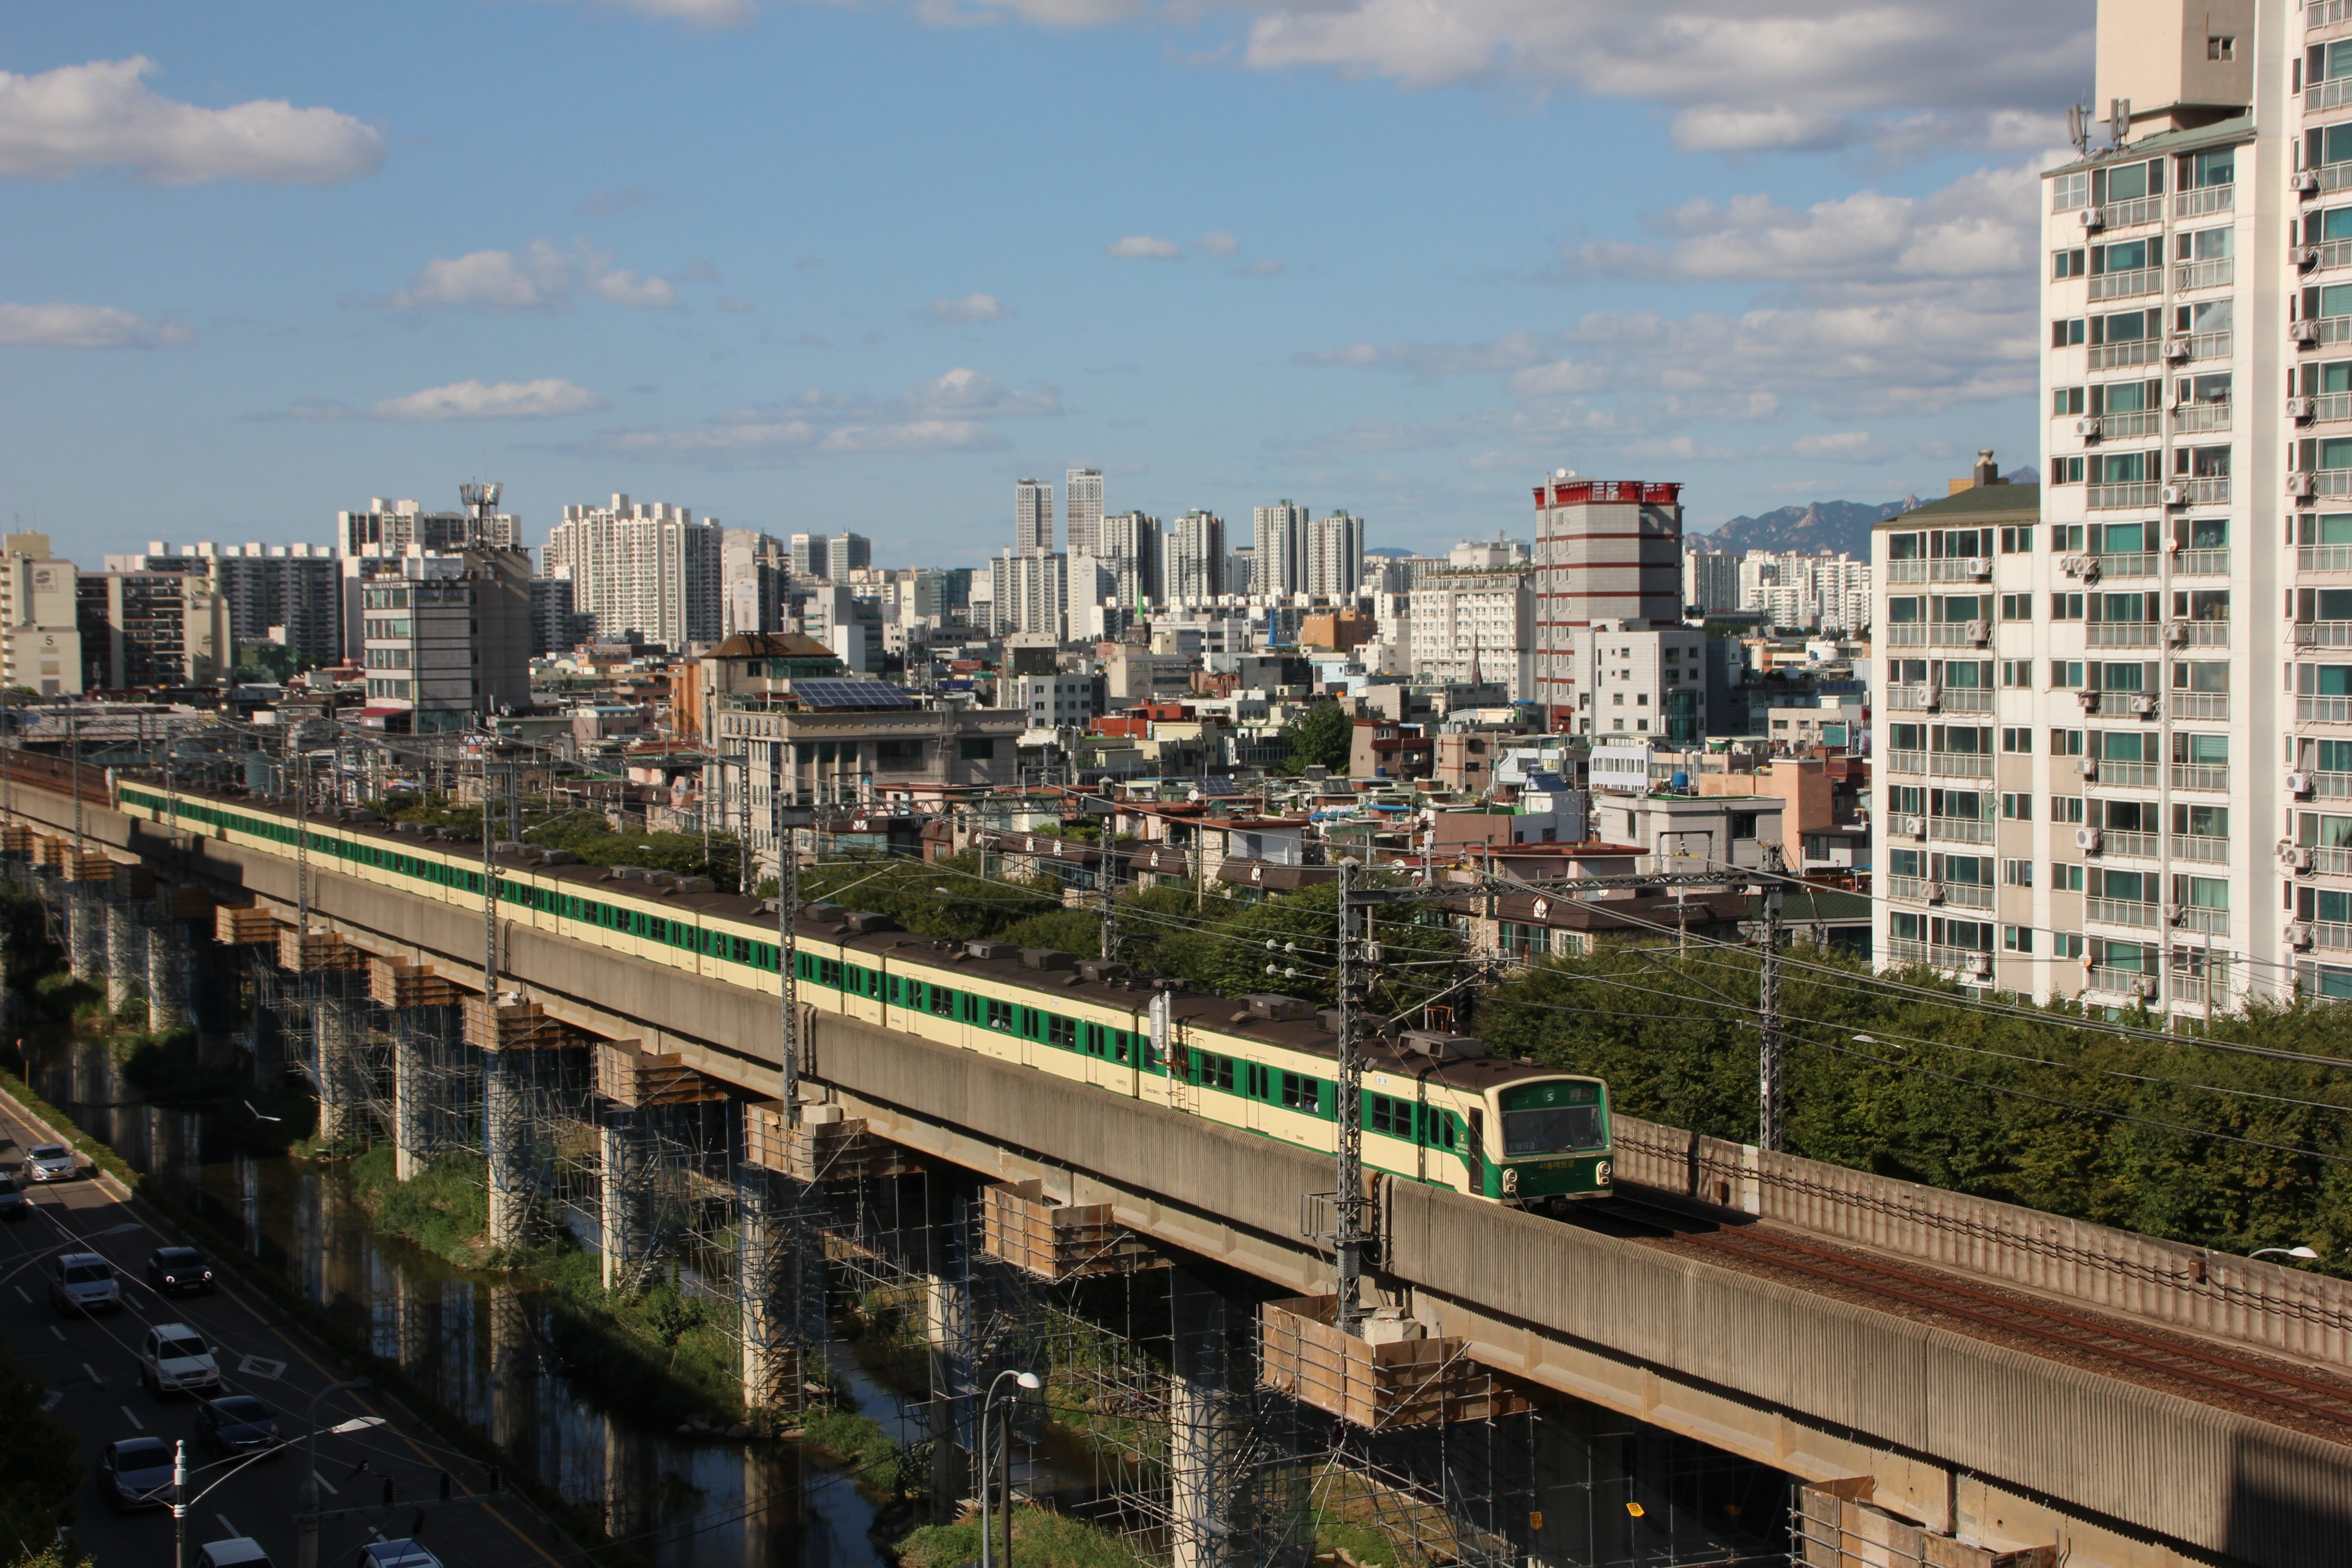 white train on gray concrete rail track, subway, republic of korea